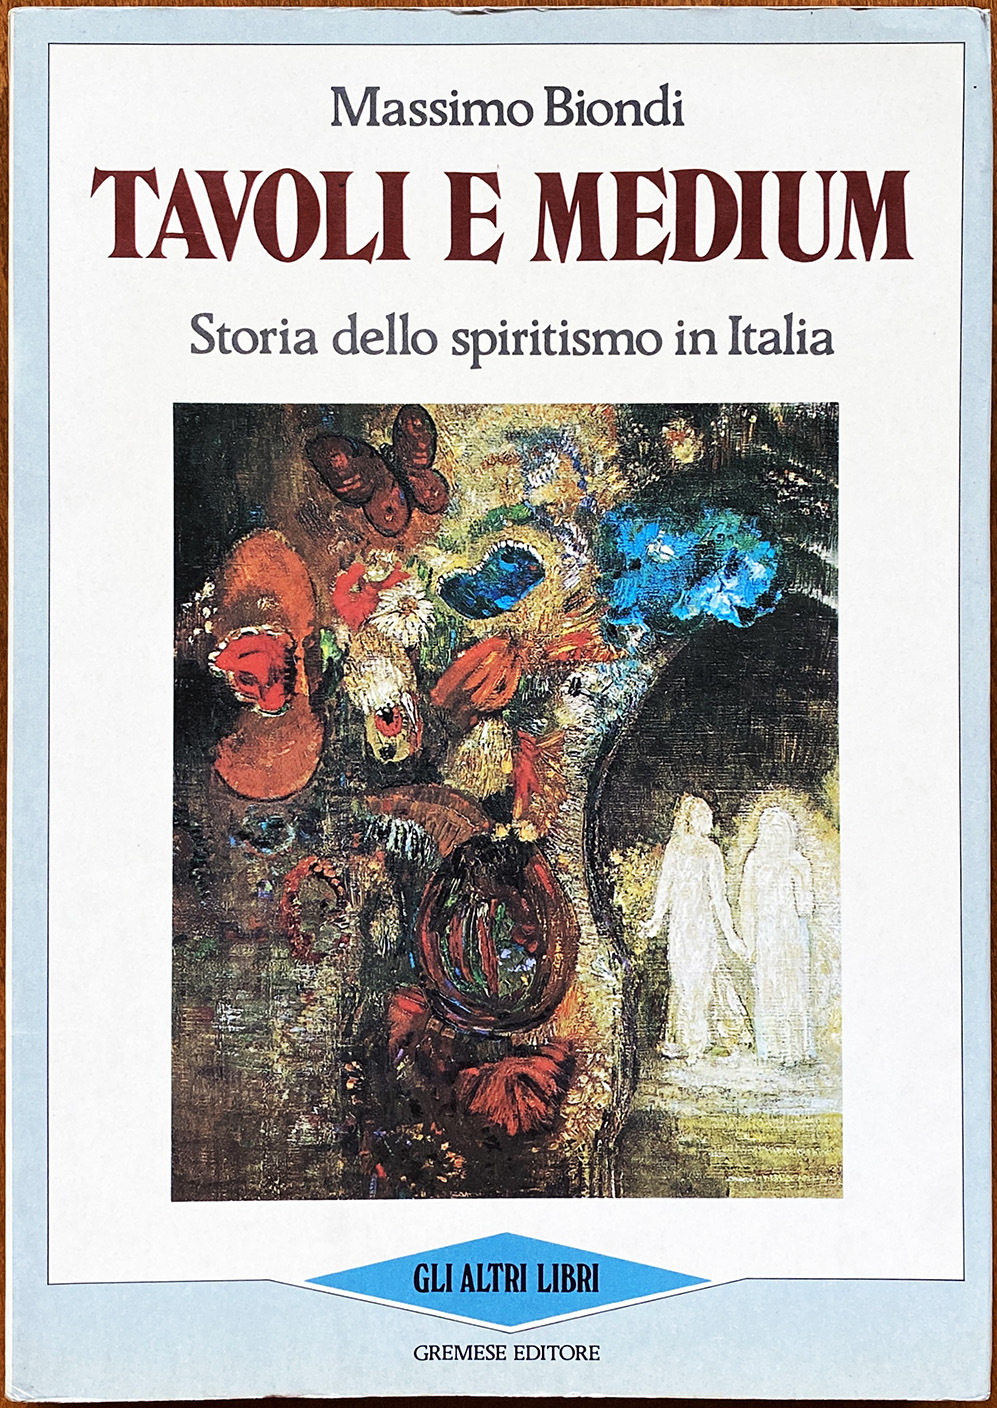 Massimo Biondi, Tavoli e medium. Storia dello Spiritismo in Italia, Ed. Gremese, 1988